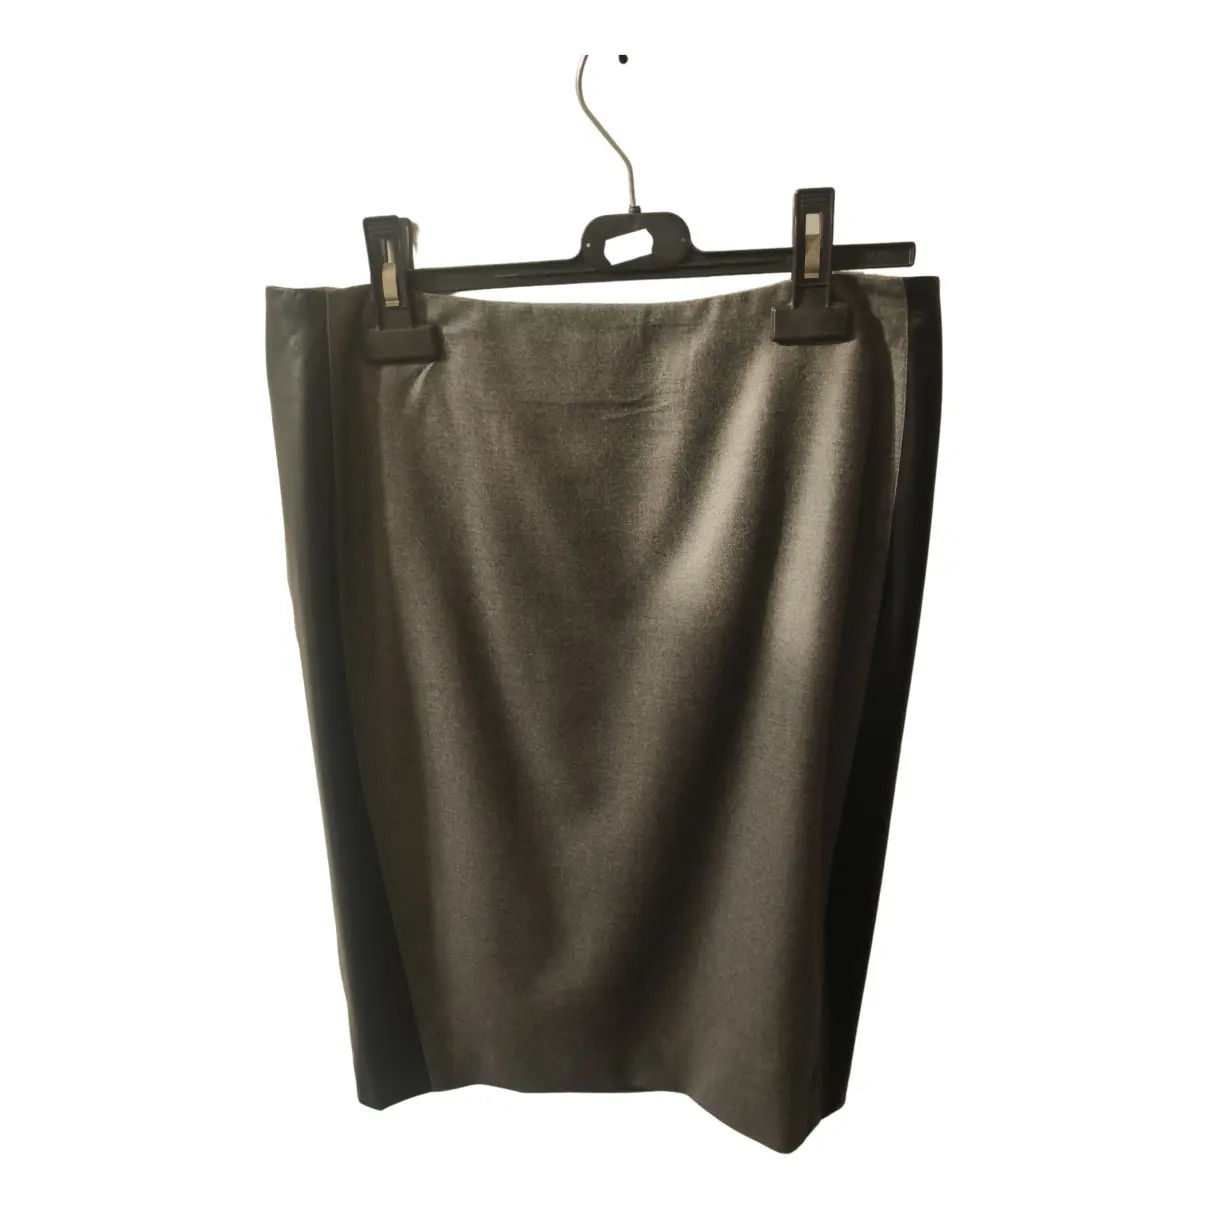 Wool mid-length skirt Balenciaga